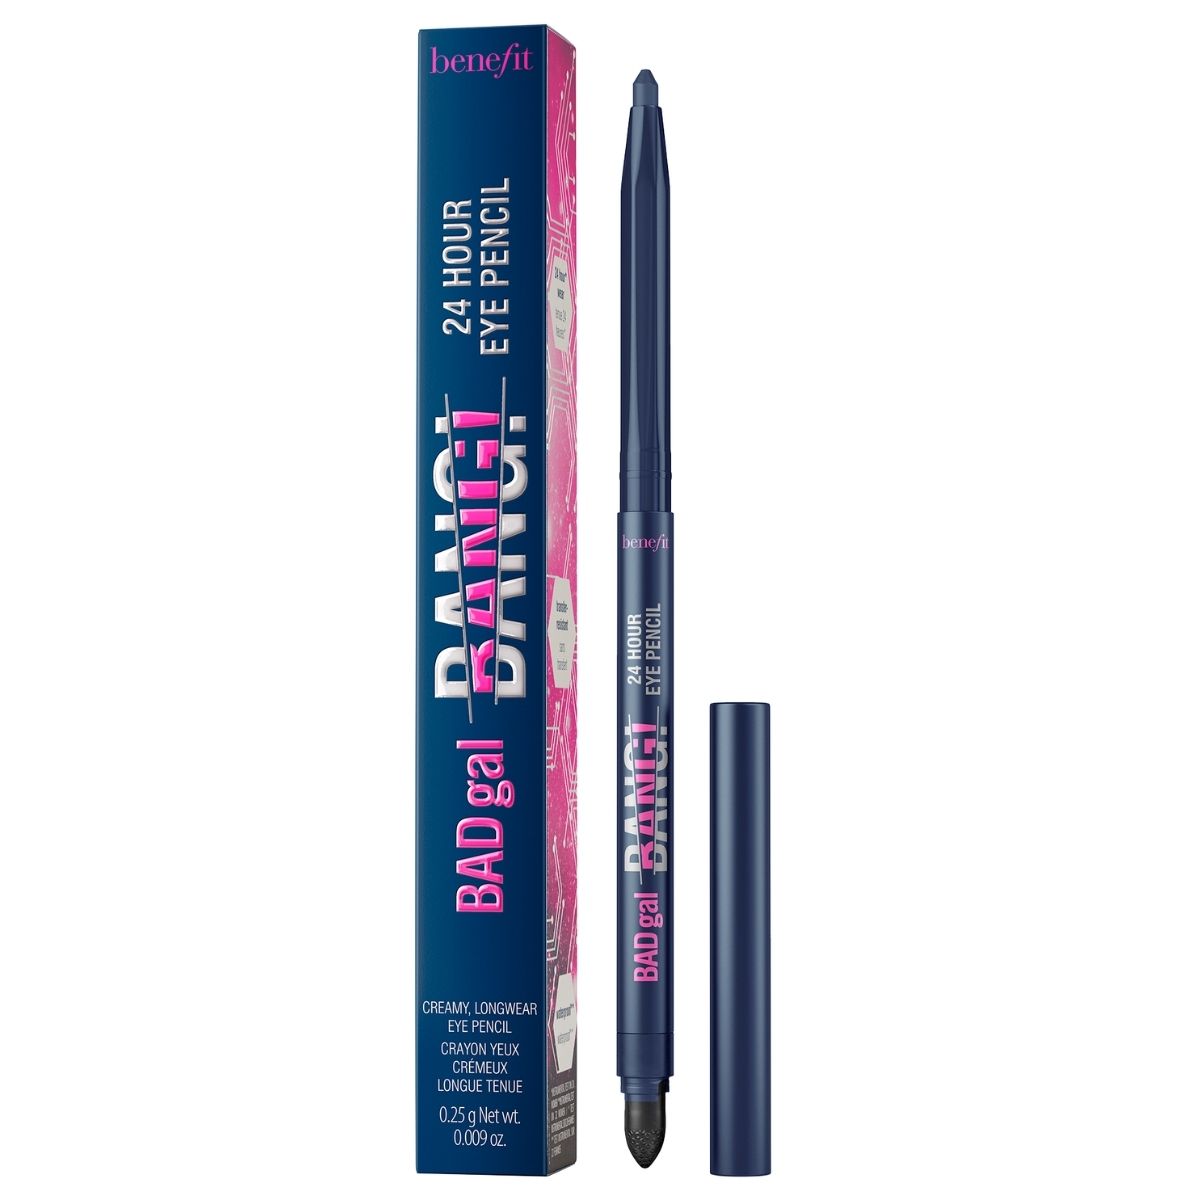 Benefit Badgal Bang 24hr Eye Pencil